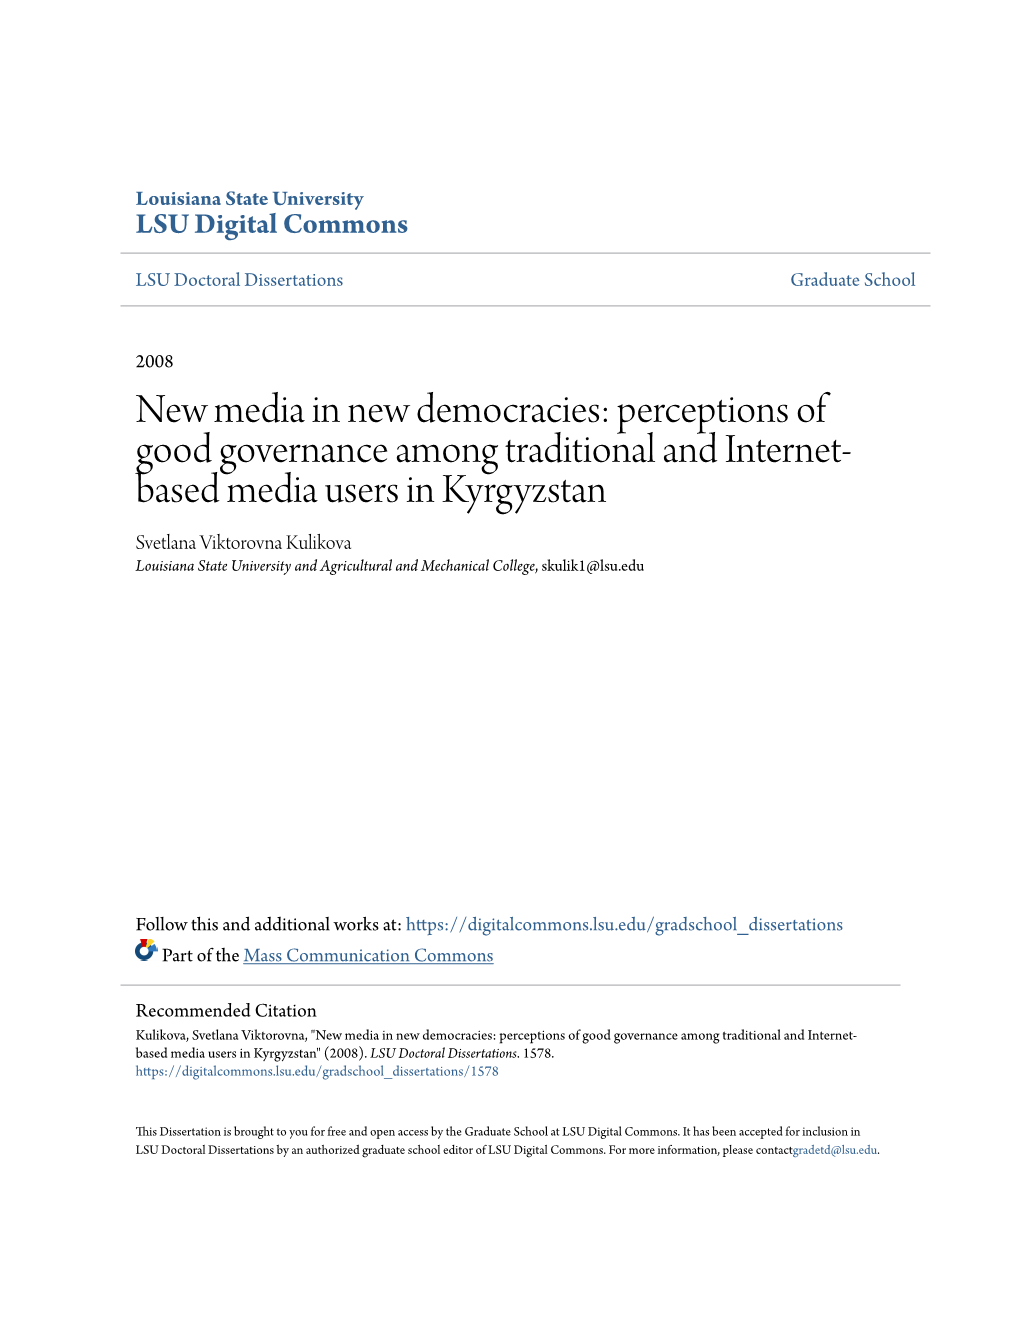 New Media in New Democracies